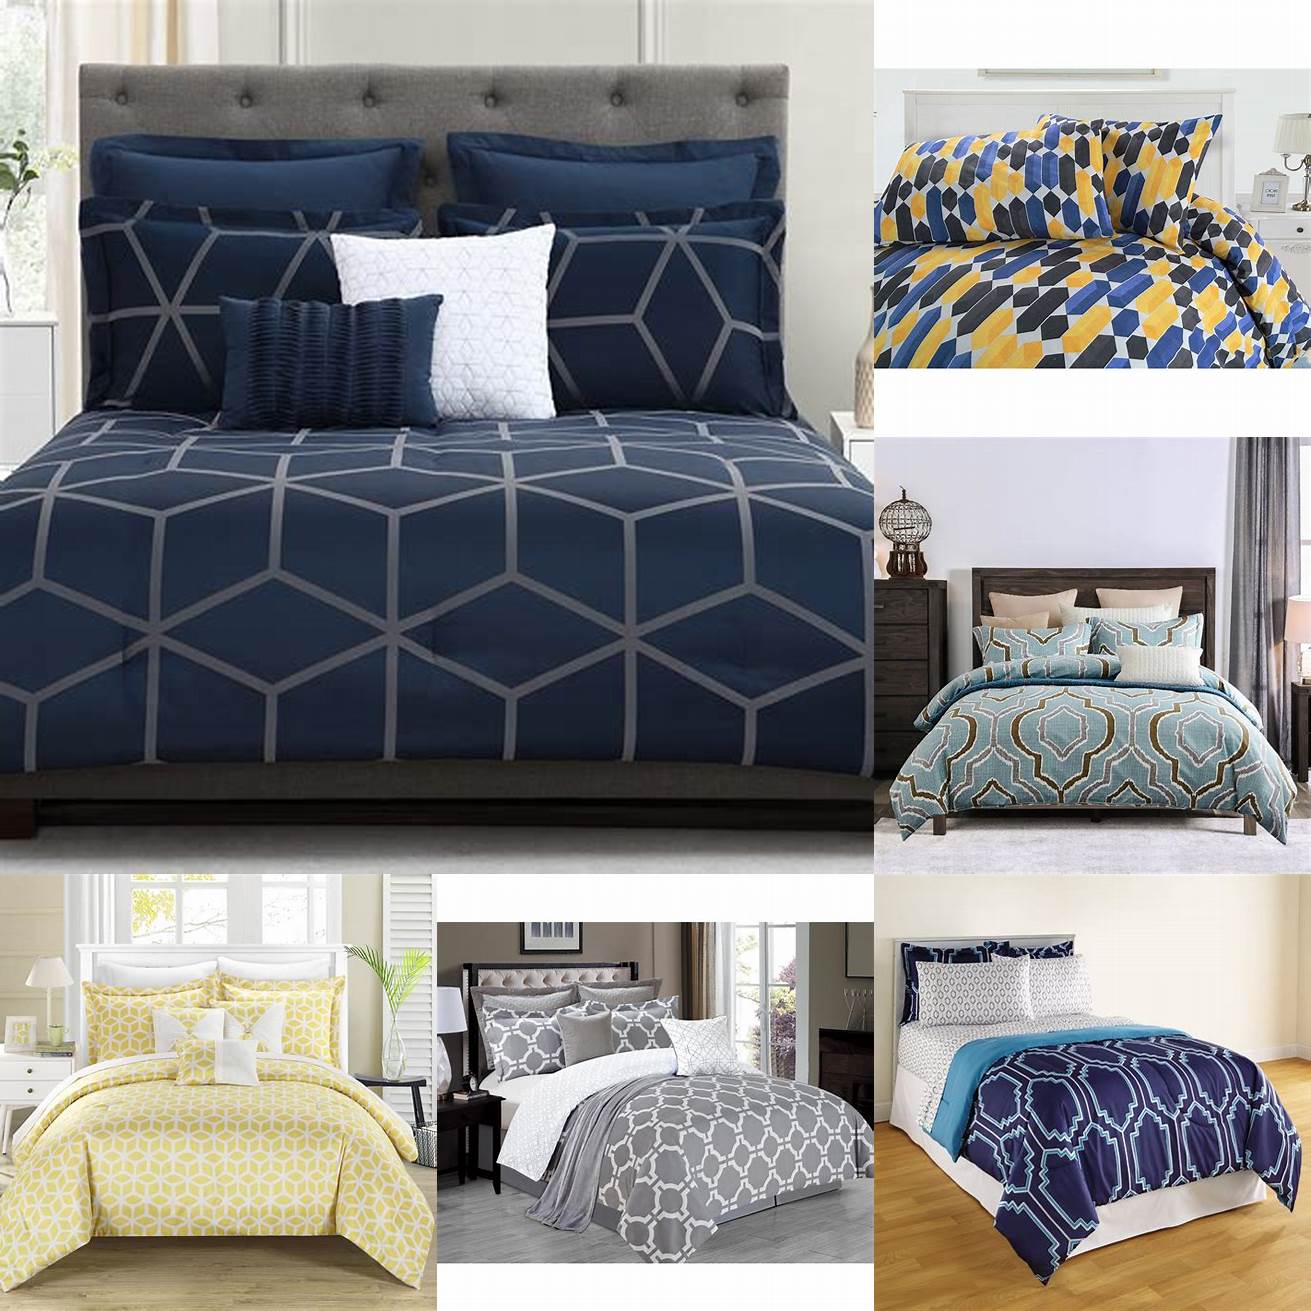 Geometric patterned comforter set